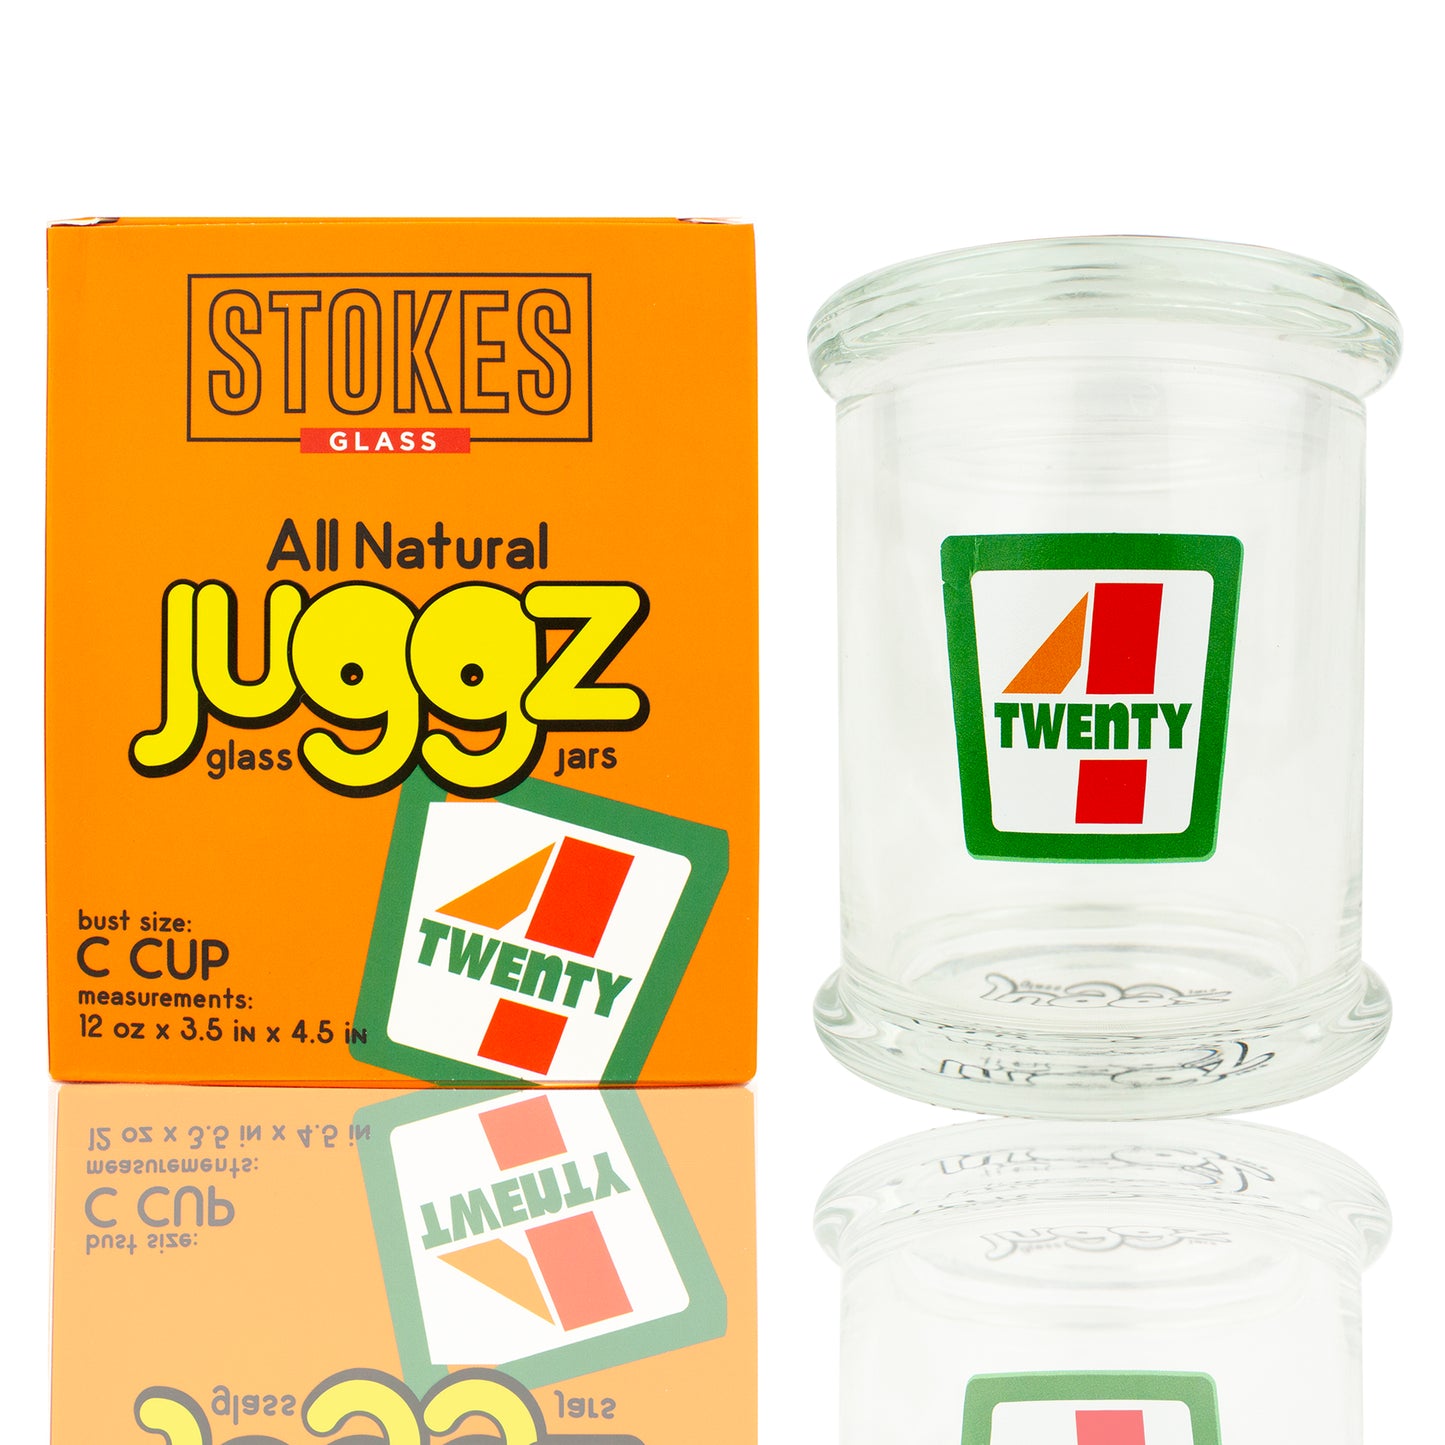 STOKES Juggz Glass Jars - 4-Twenty